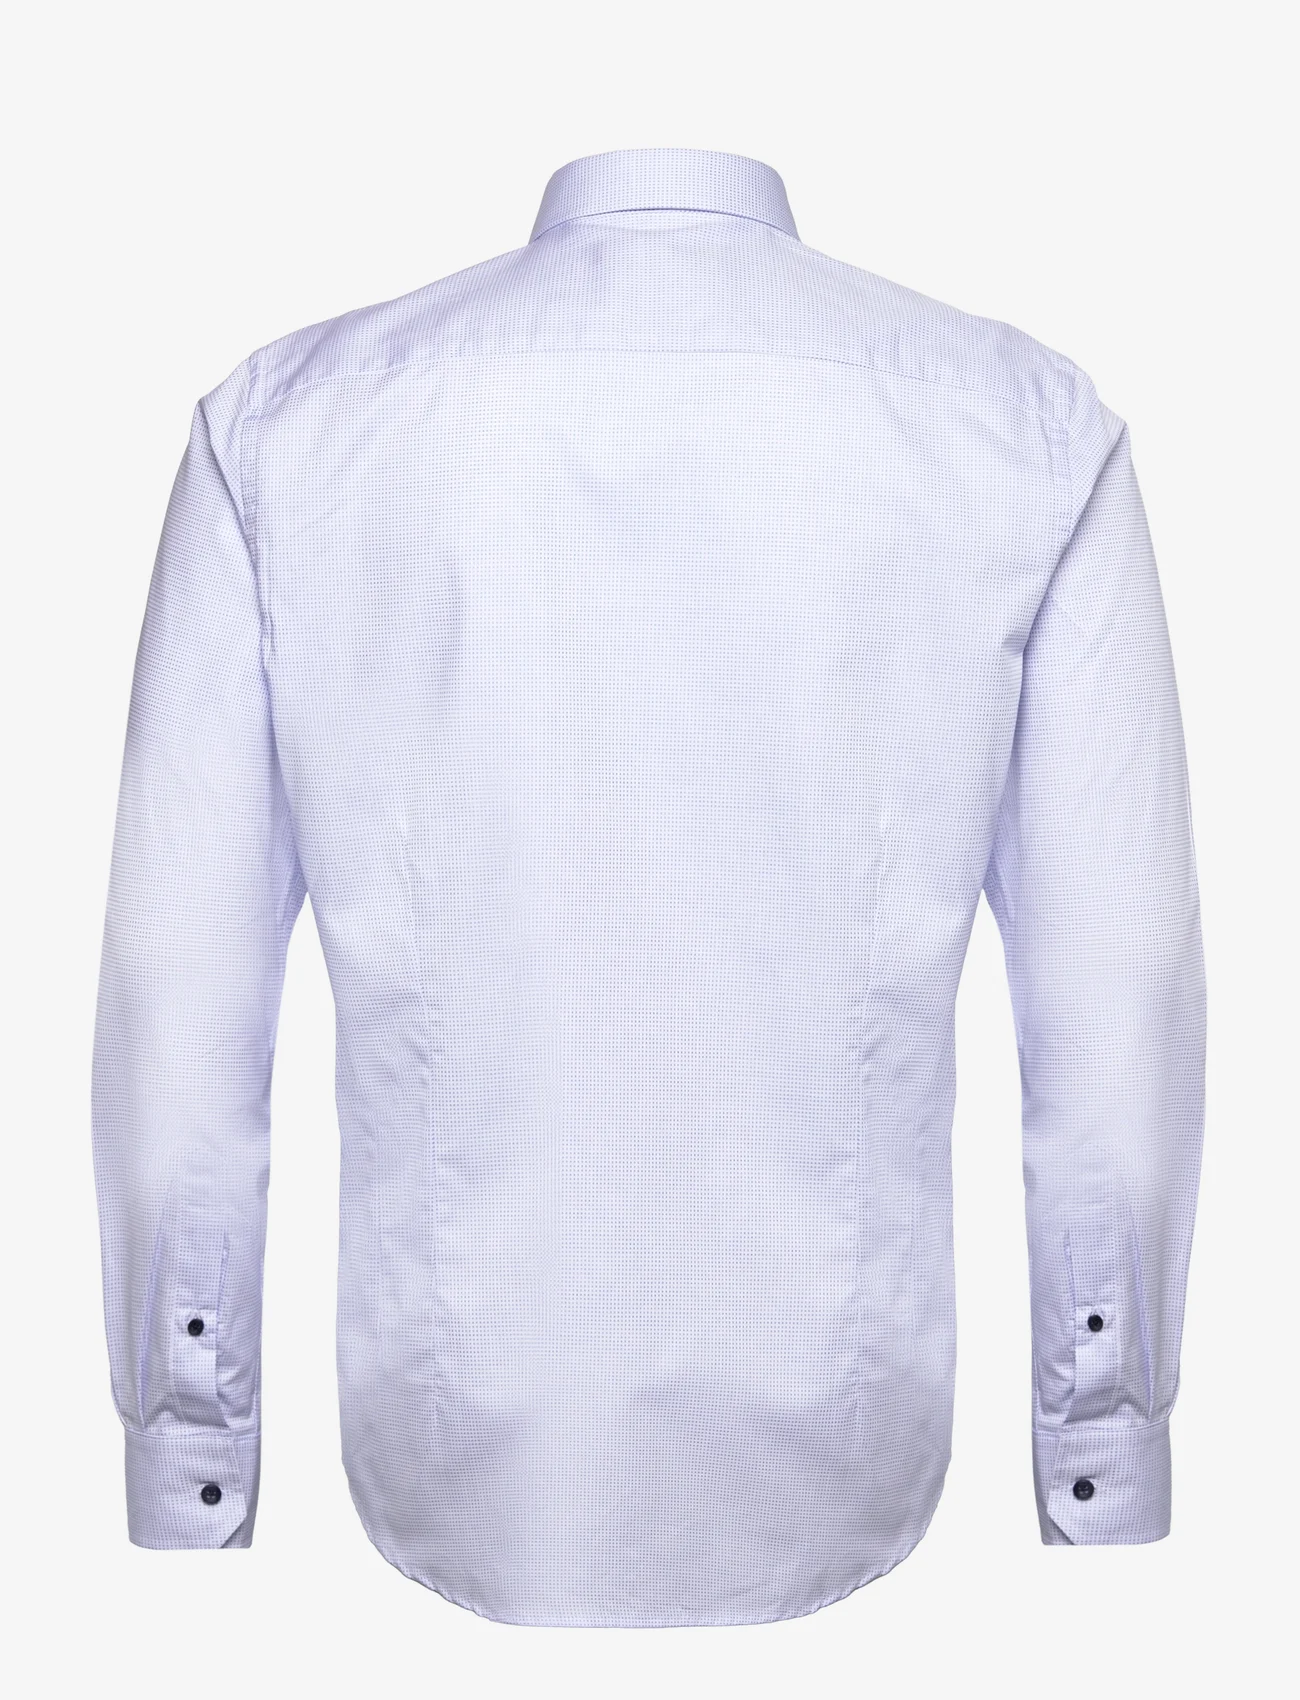 Bosweel Shirts Est. 1937 - Slim fit Mens shirt - business shirts - light blue - 1